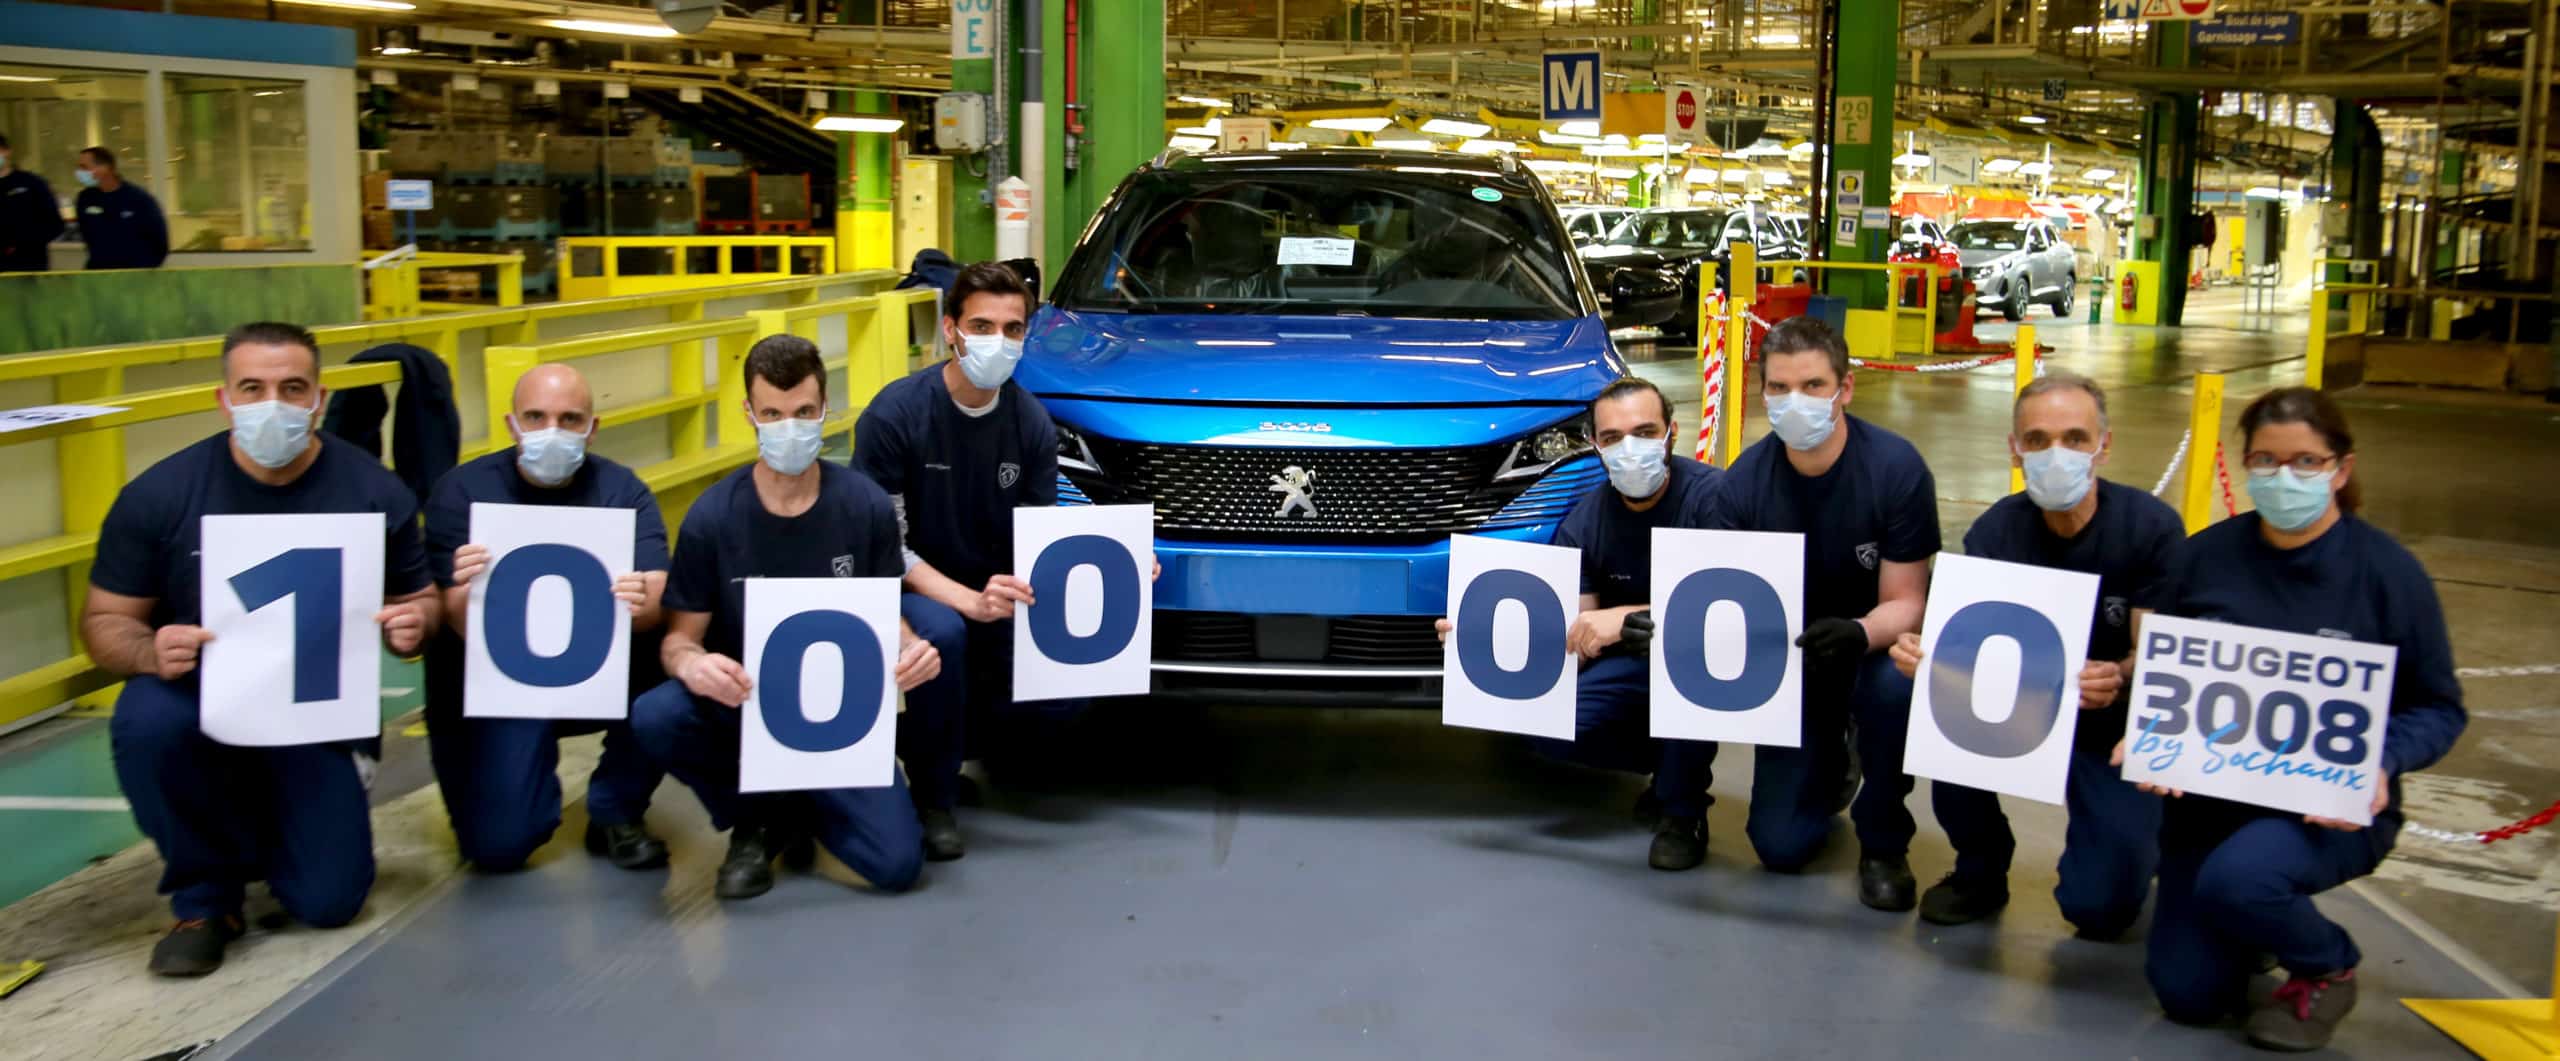 Eine Million Peugeot 3008